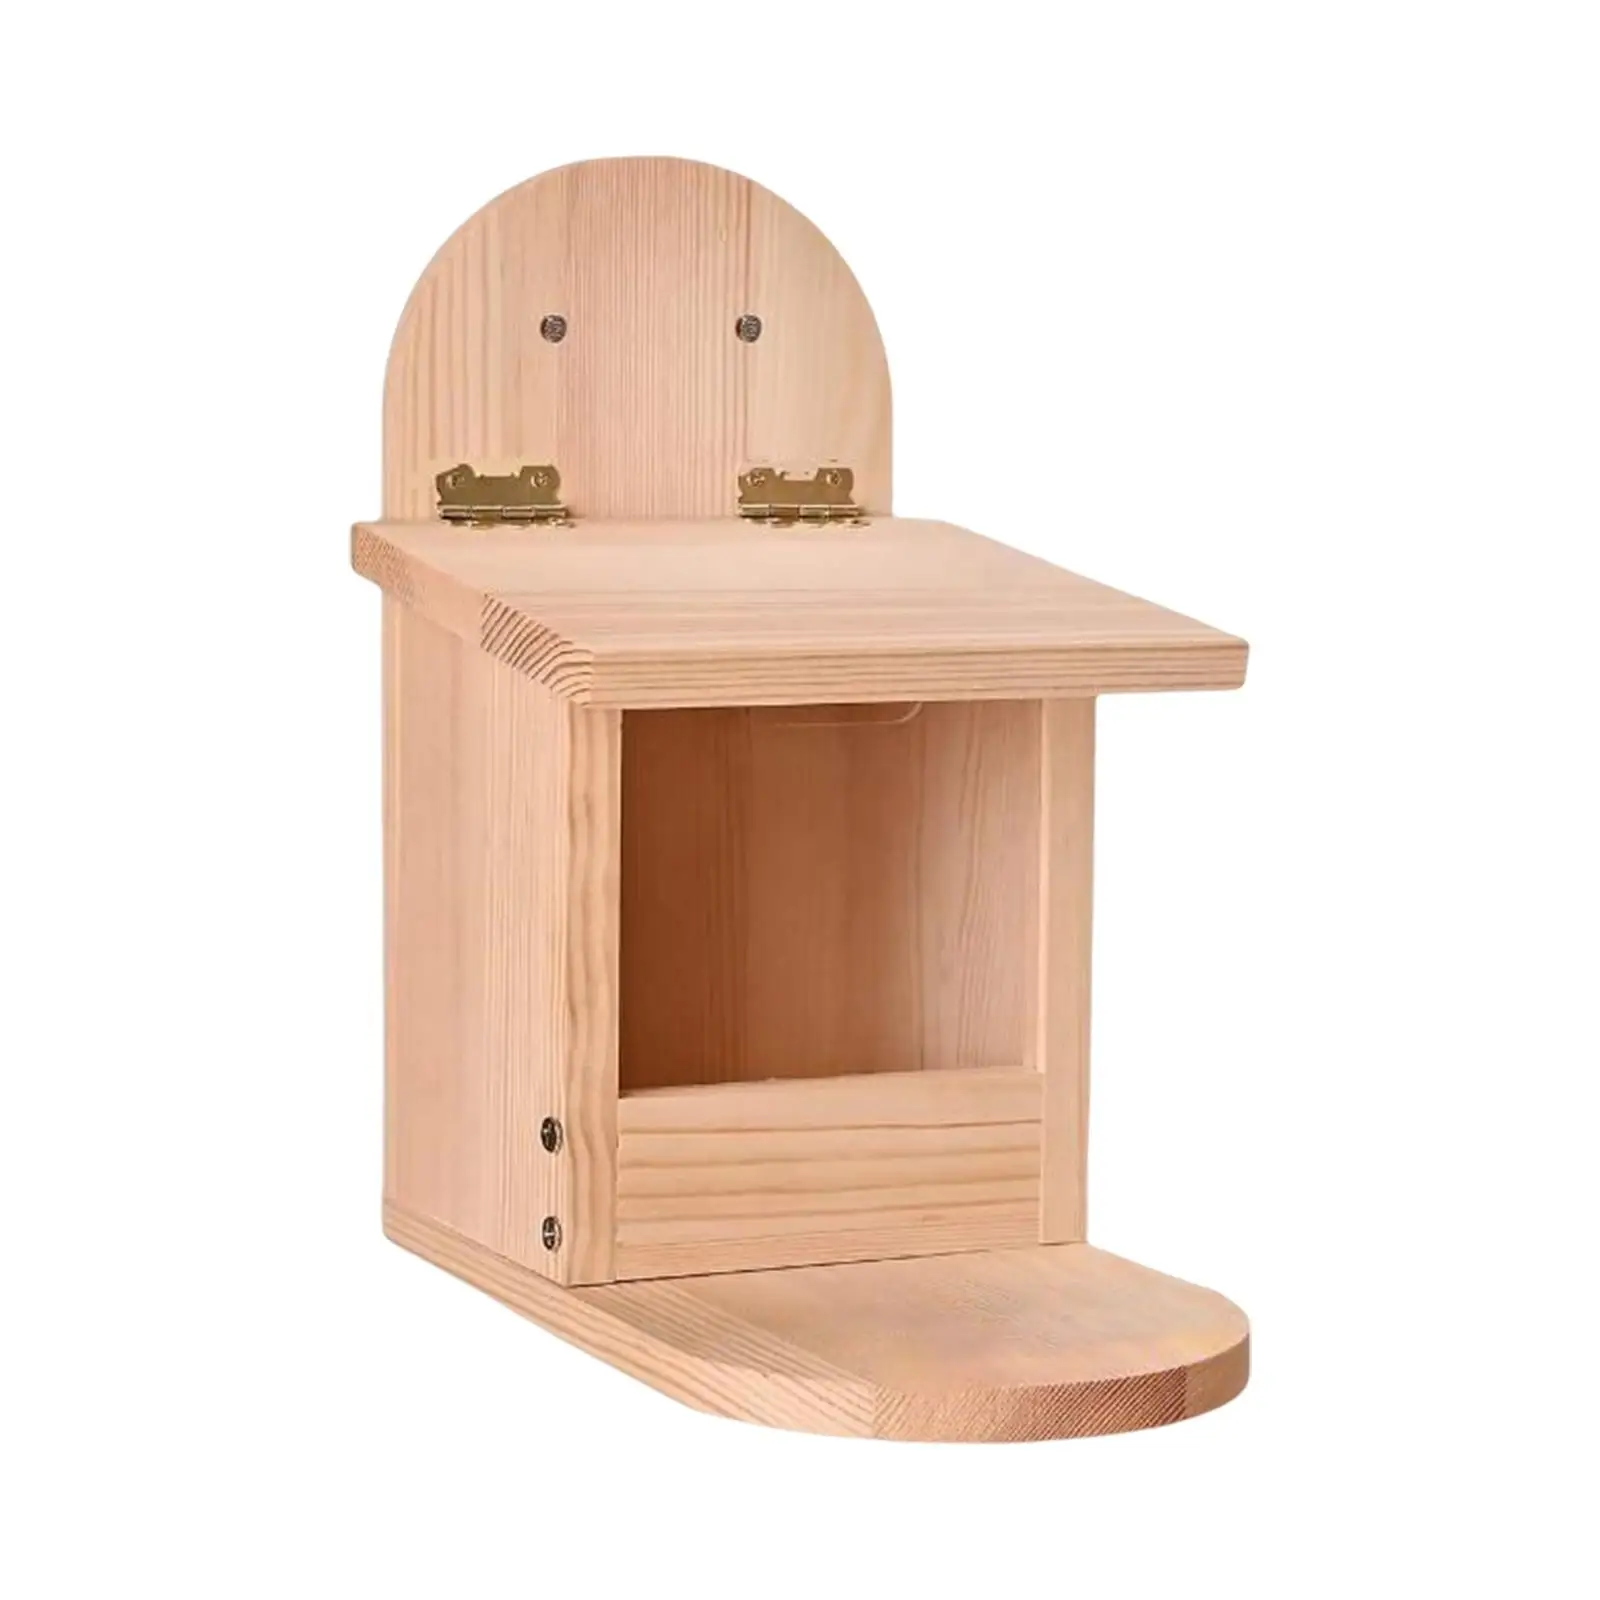 Wooden Squirrel Feeder Box with Feeding Platform Picnic Table Feeder Handcrafted Wood Animal Feeder House for Backyard Patio